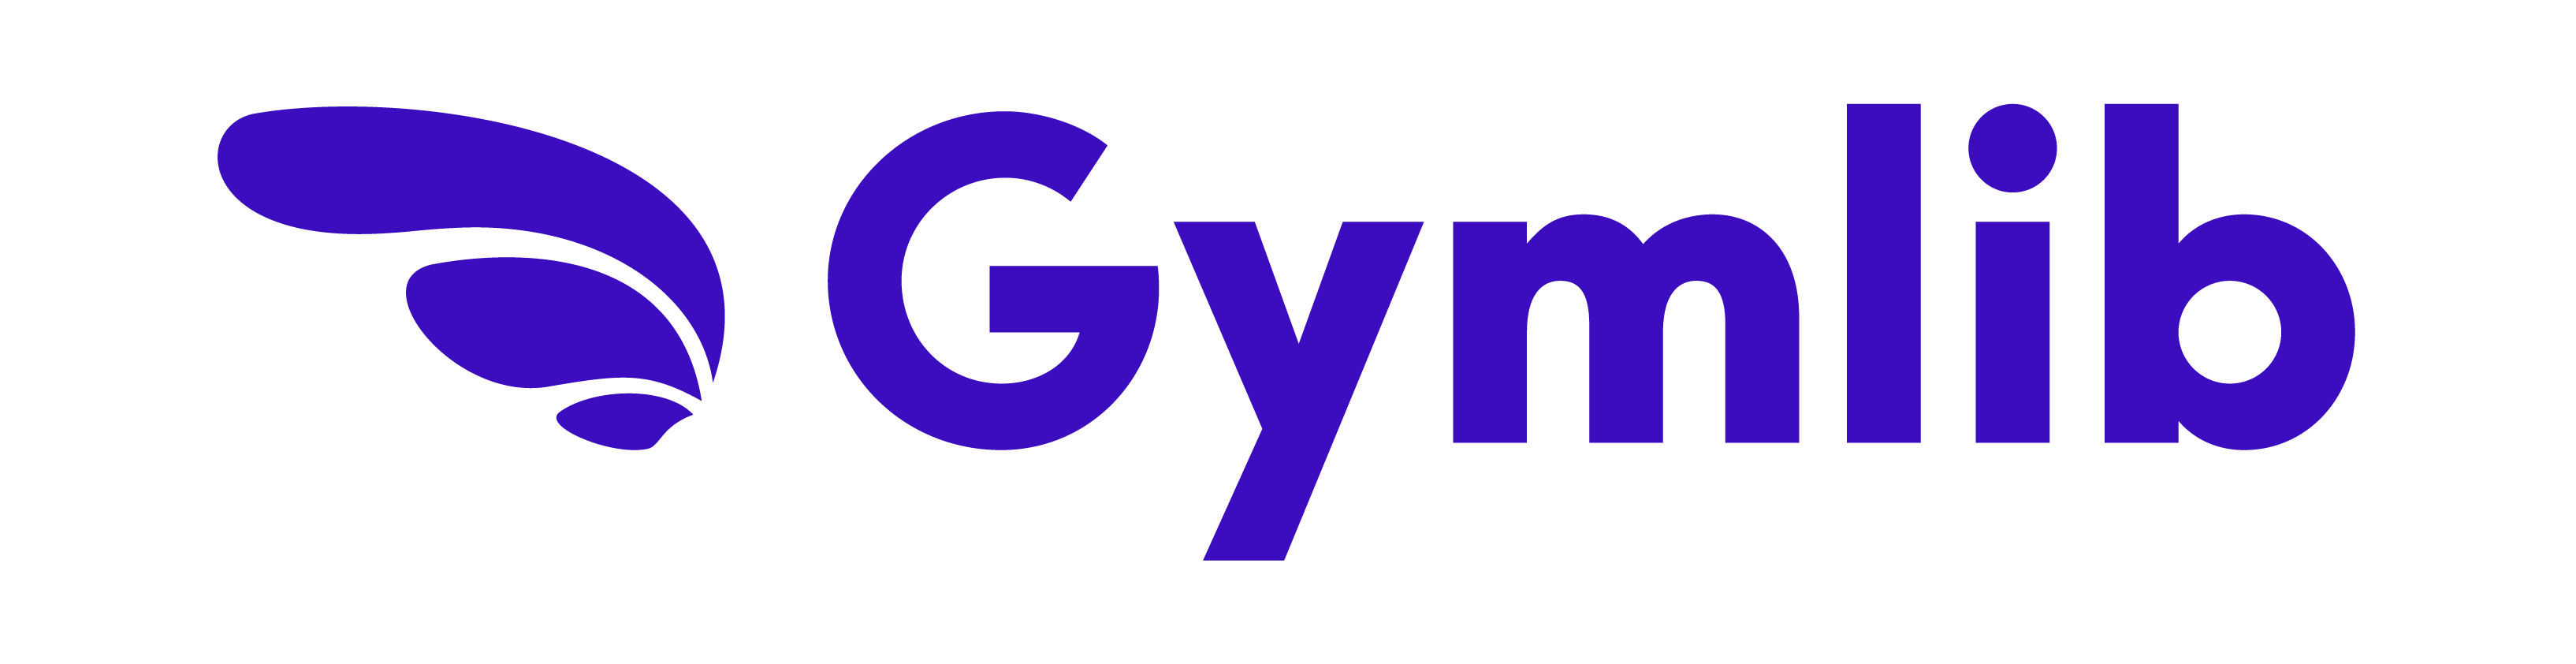 logo-gymlib